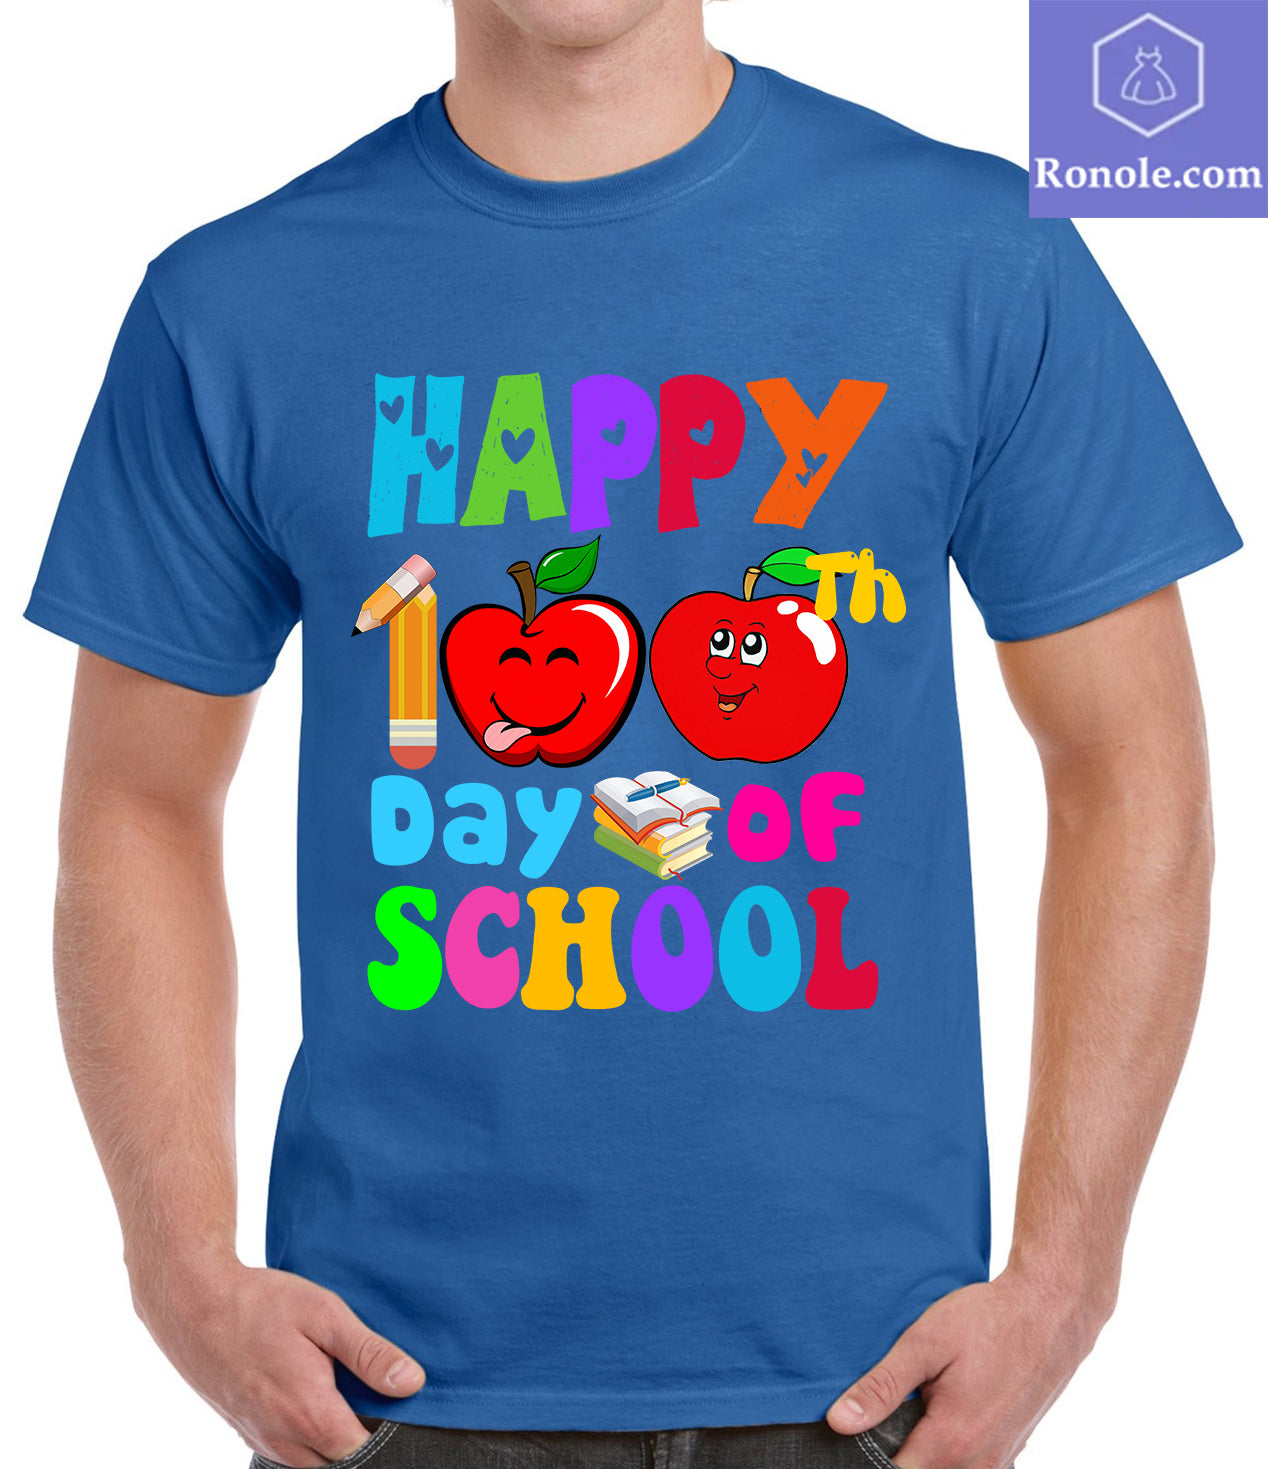 hundred days of school shirt ideas